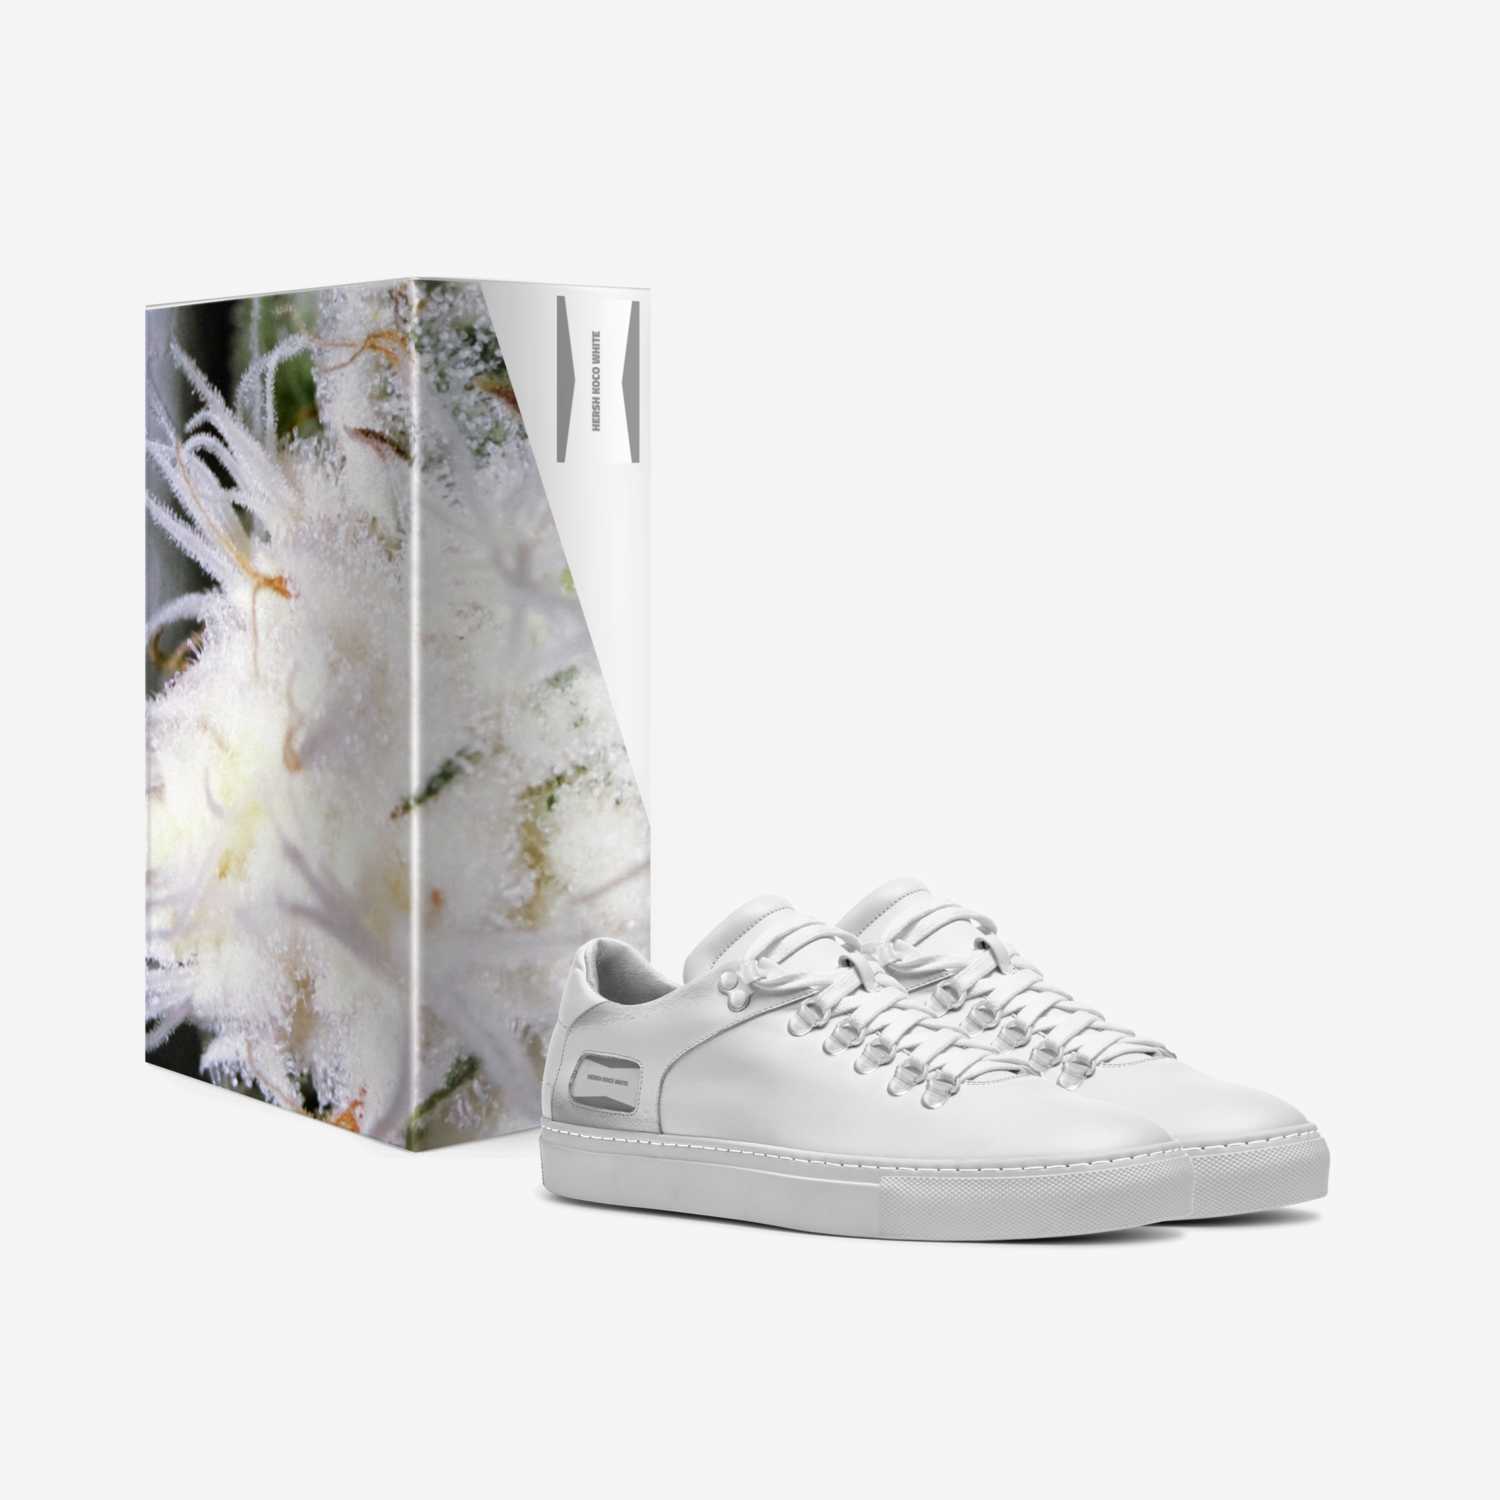 HERSH KOCO WHITE custom made in Italy shoes by Hersh White | Box view